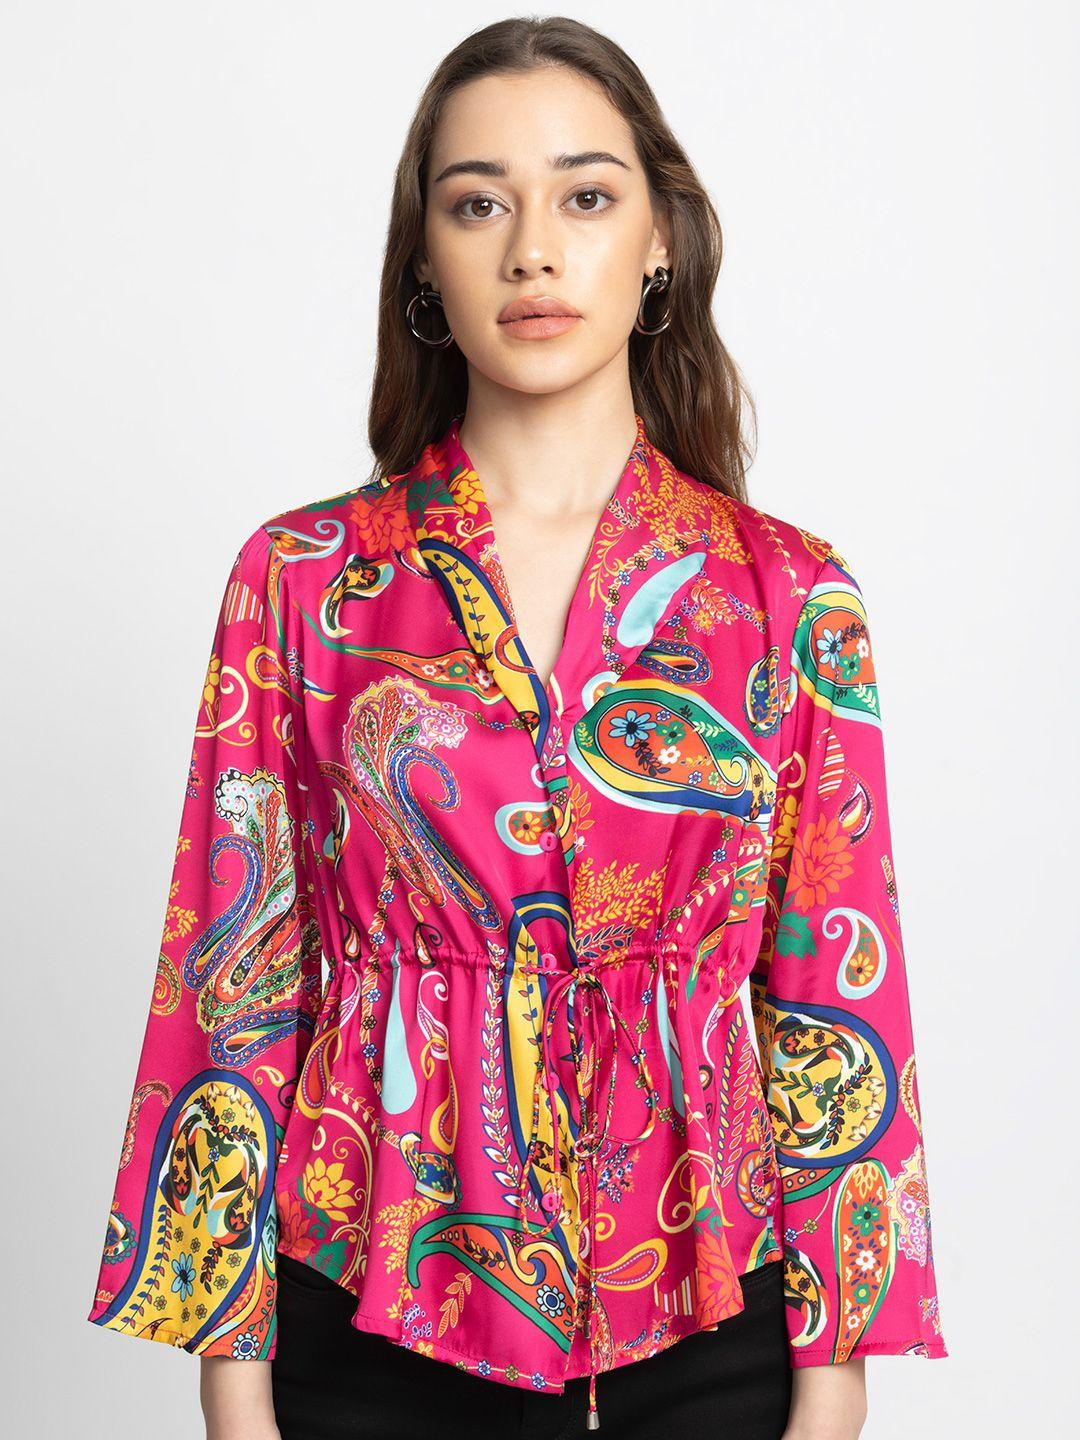 shaye-floral-printed-casual-shirt-style-tops